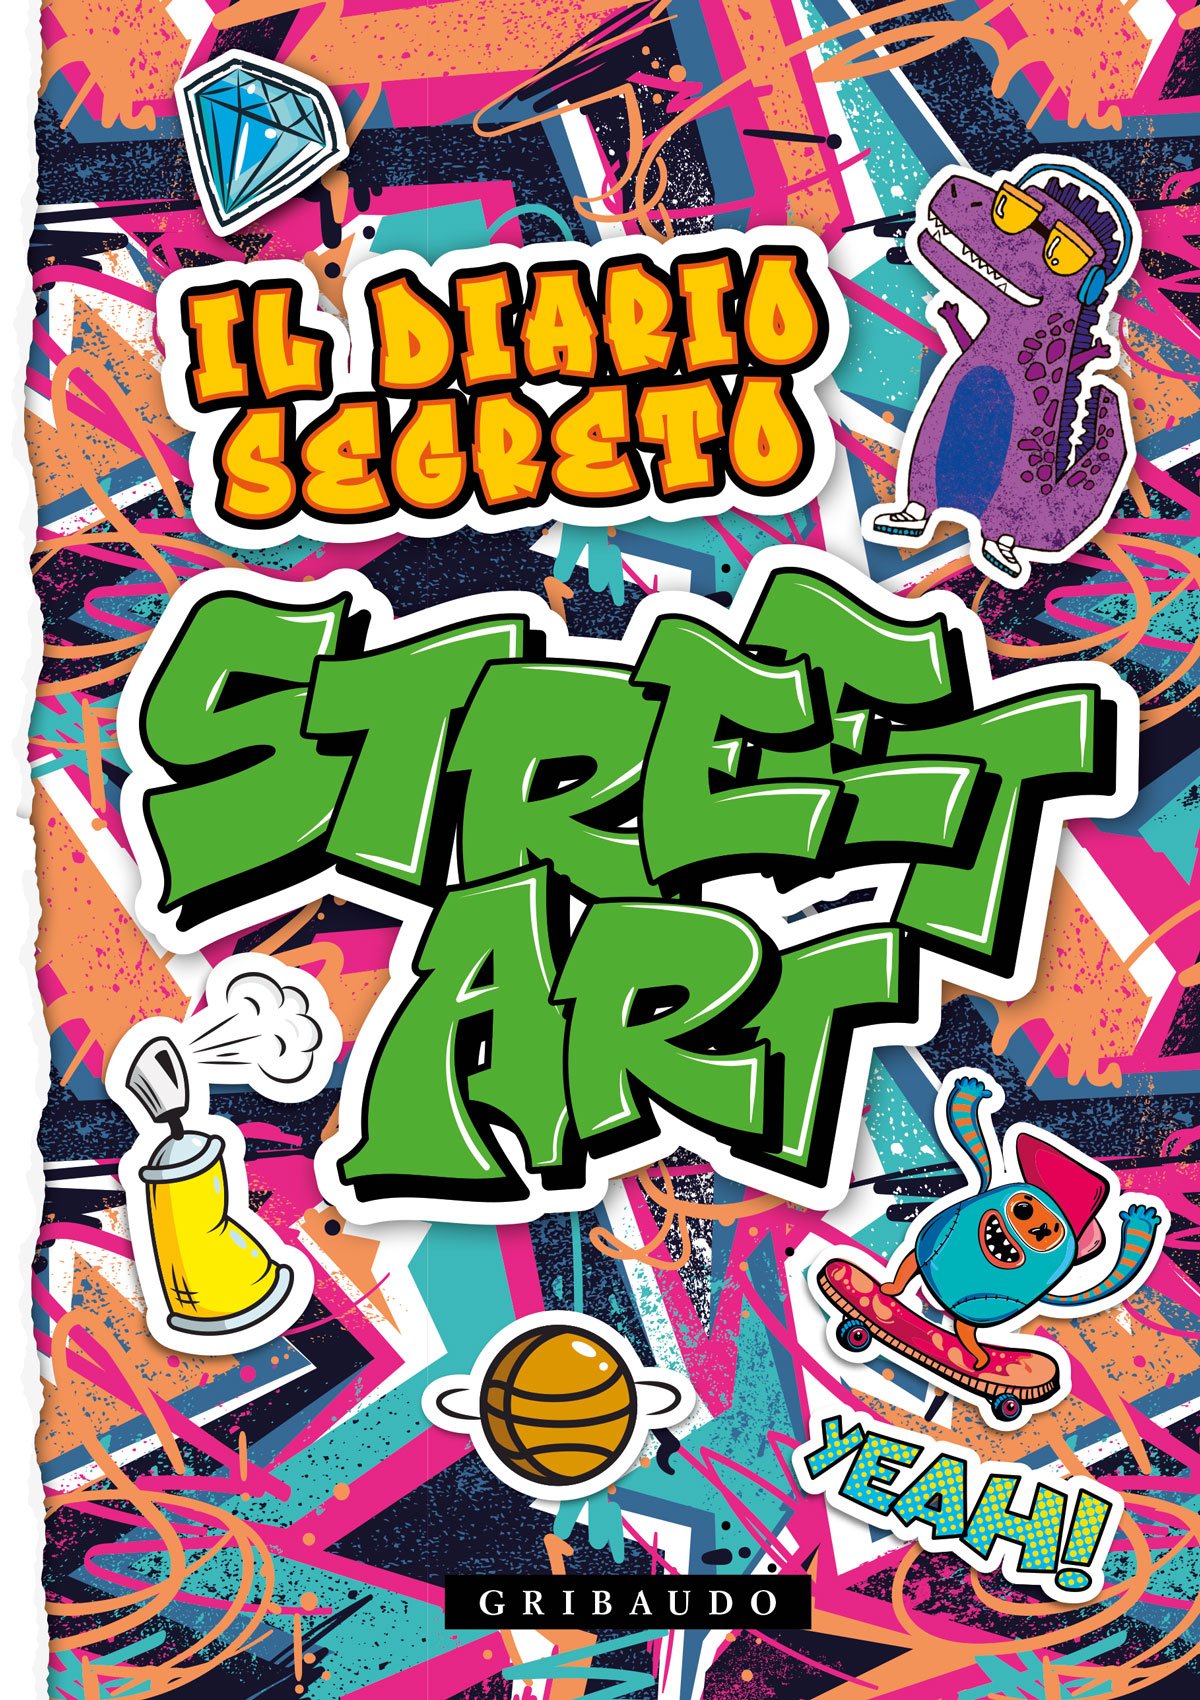 Il diario segreto street art